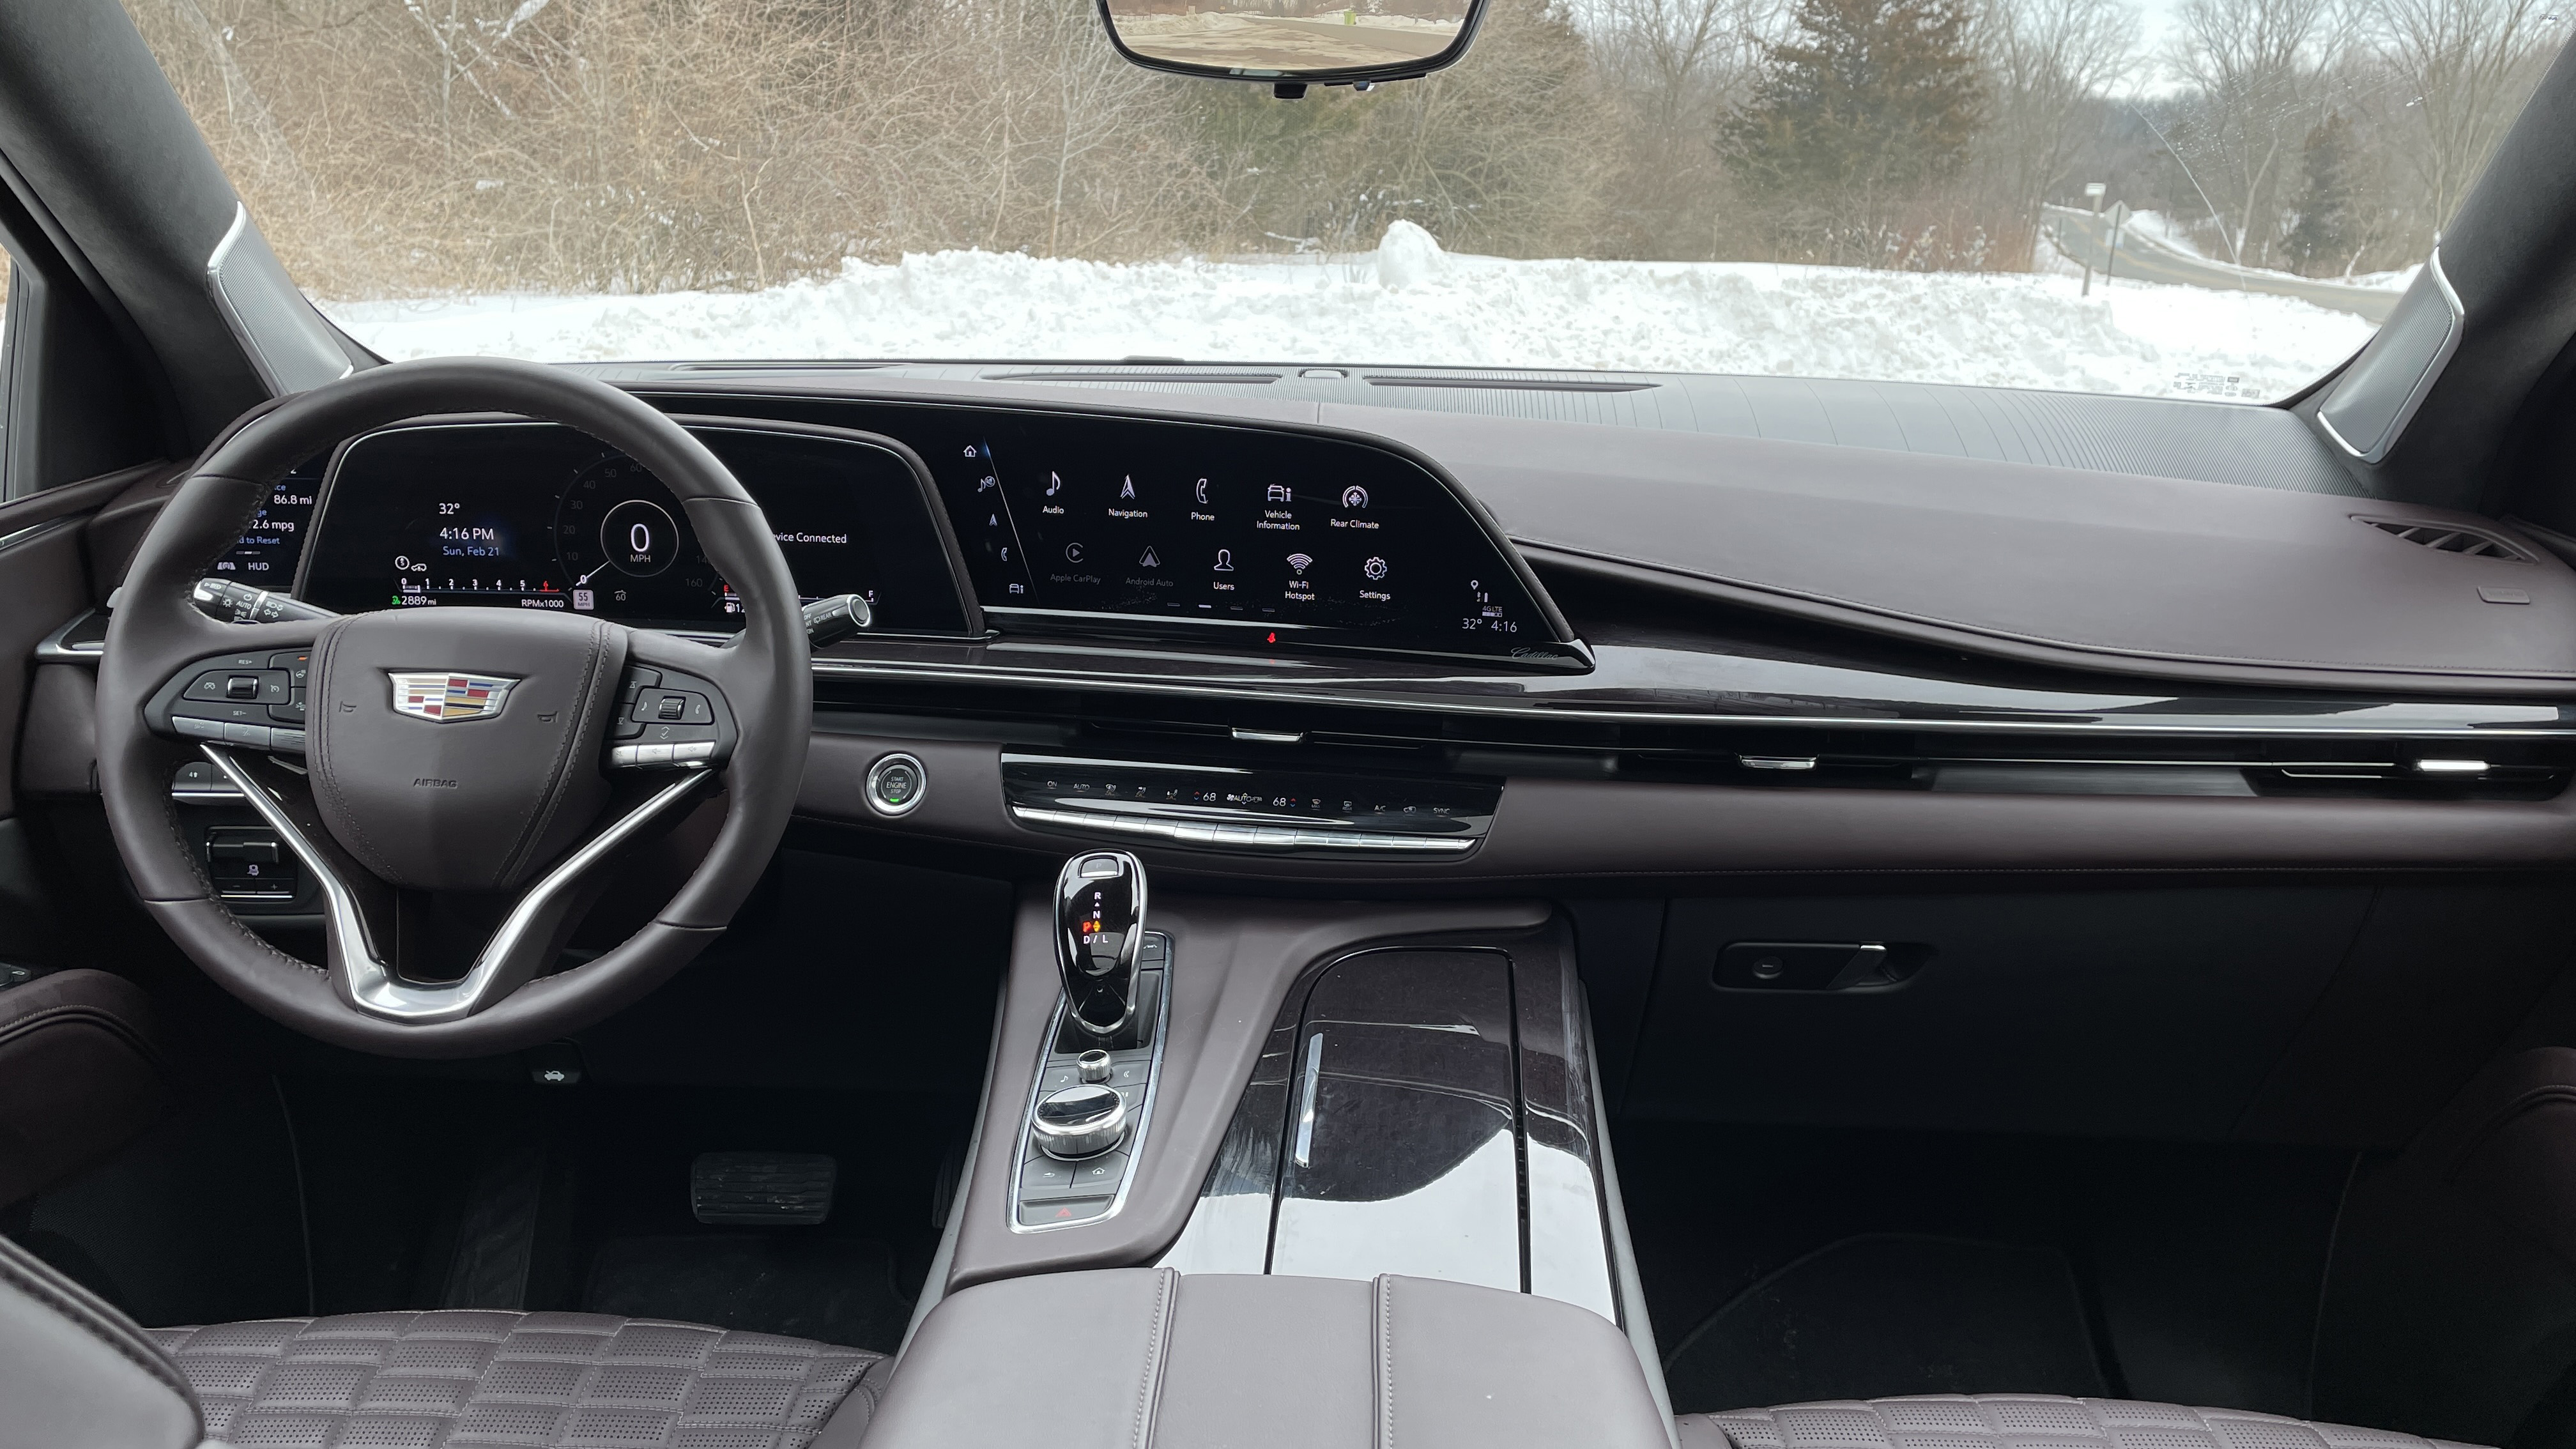 2021 Cadillac Escalade Sport Platinum interior Photo Gallery